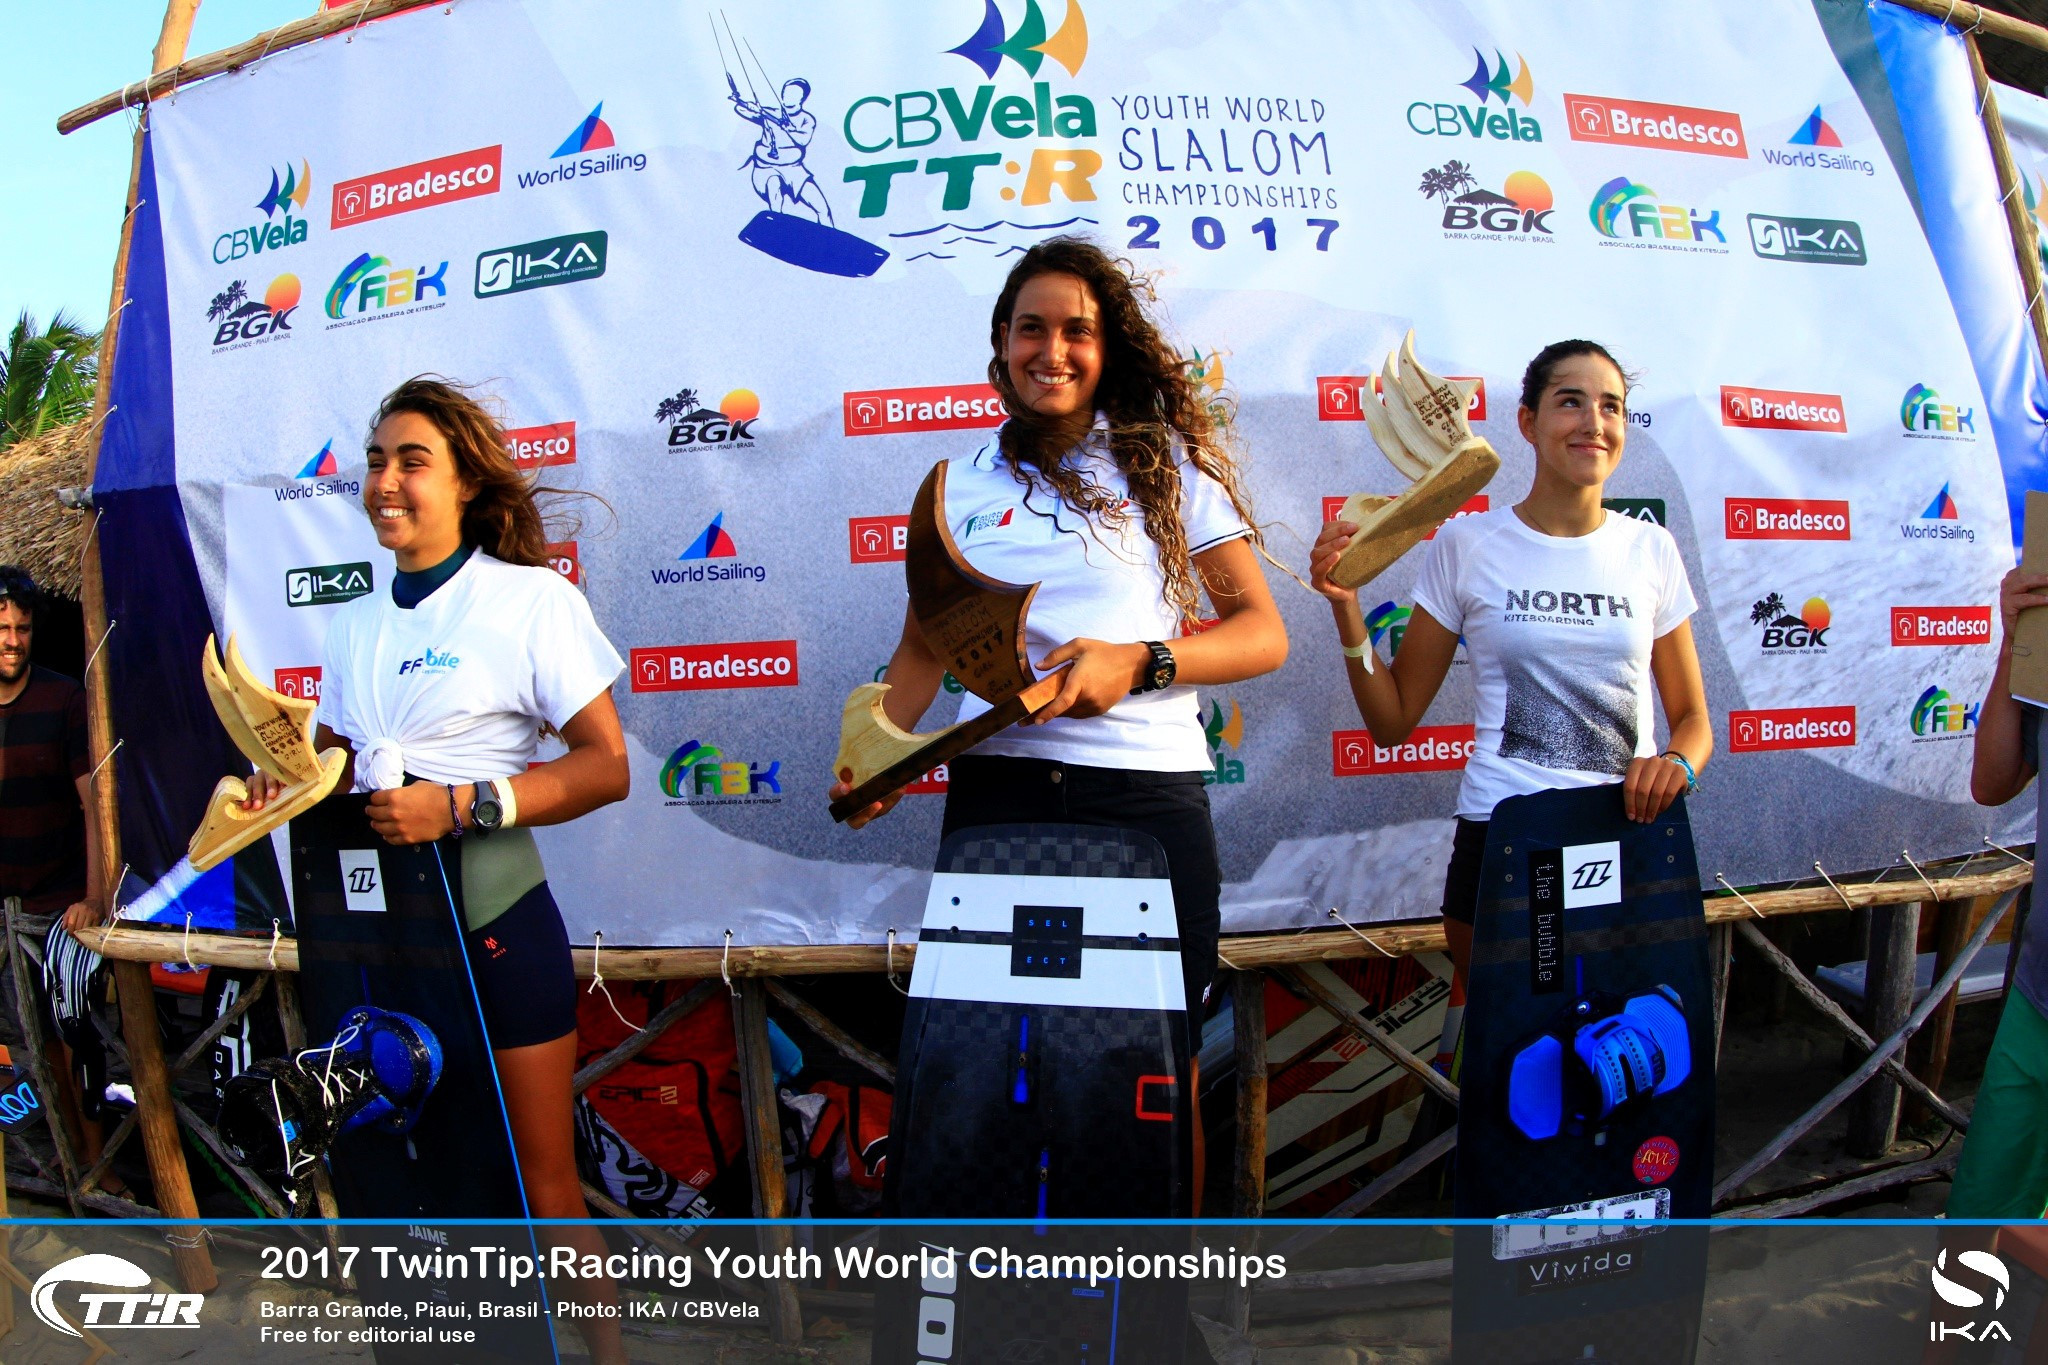 Europeans dominate youth kiteboarding championships in Brazil